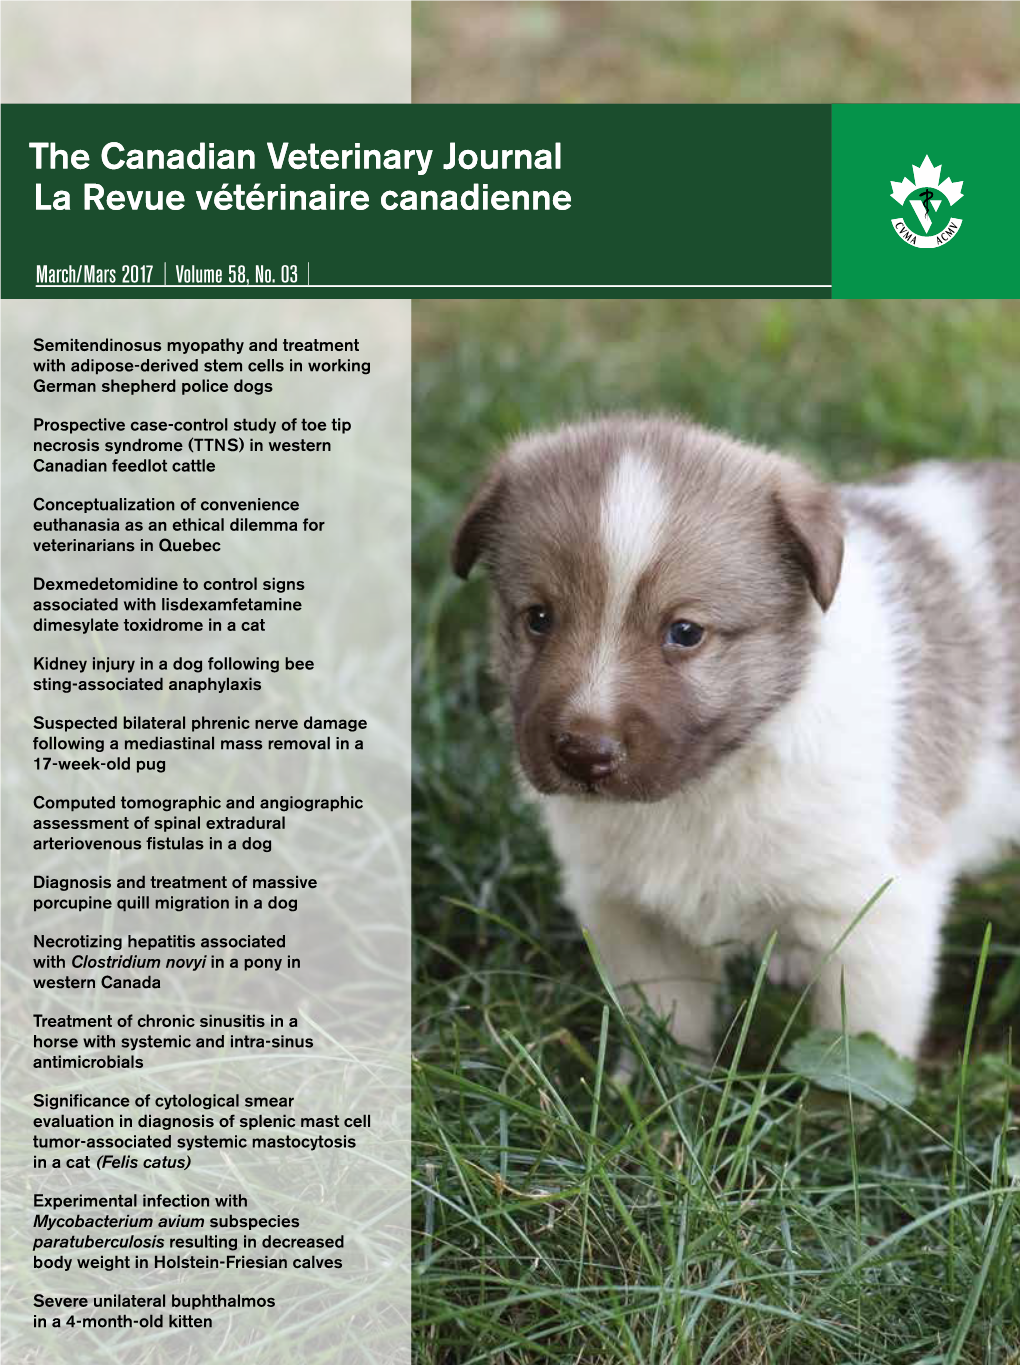 The Canadian Veterinary Journal La Revue Vétérinaire Canadienne the Canadian Veterinary Journal La Revue Vétérinaire Canadie